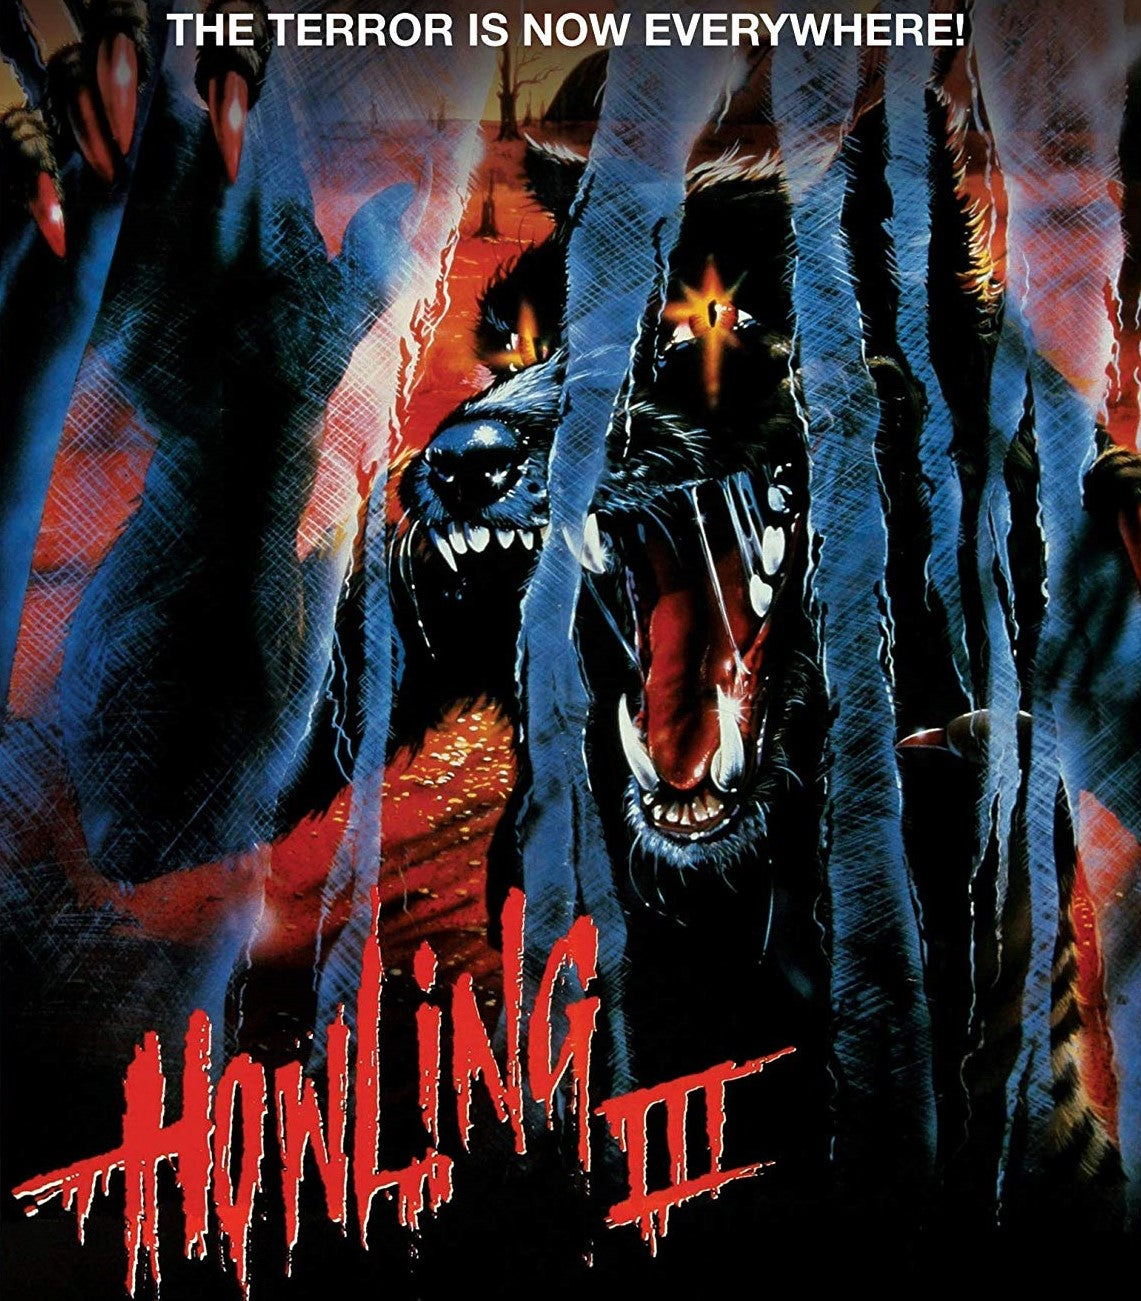 Howling Iii Blu-Ray Blu-Ray